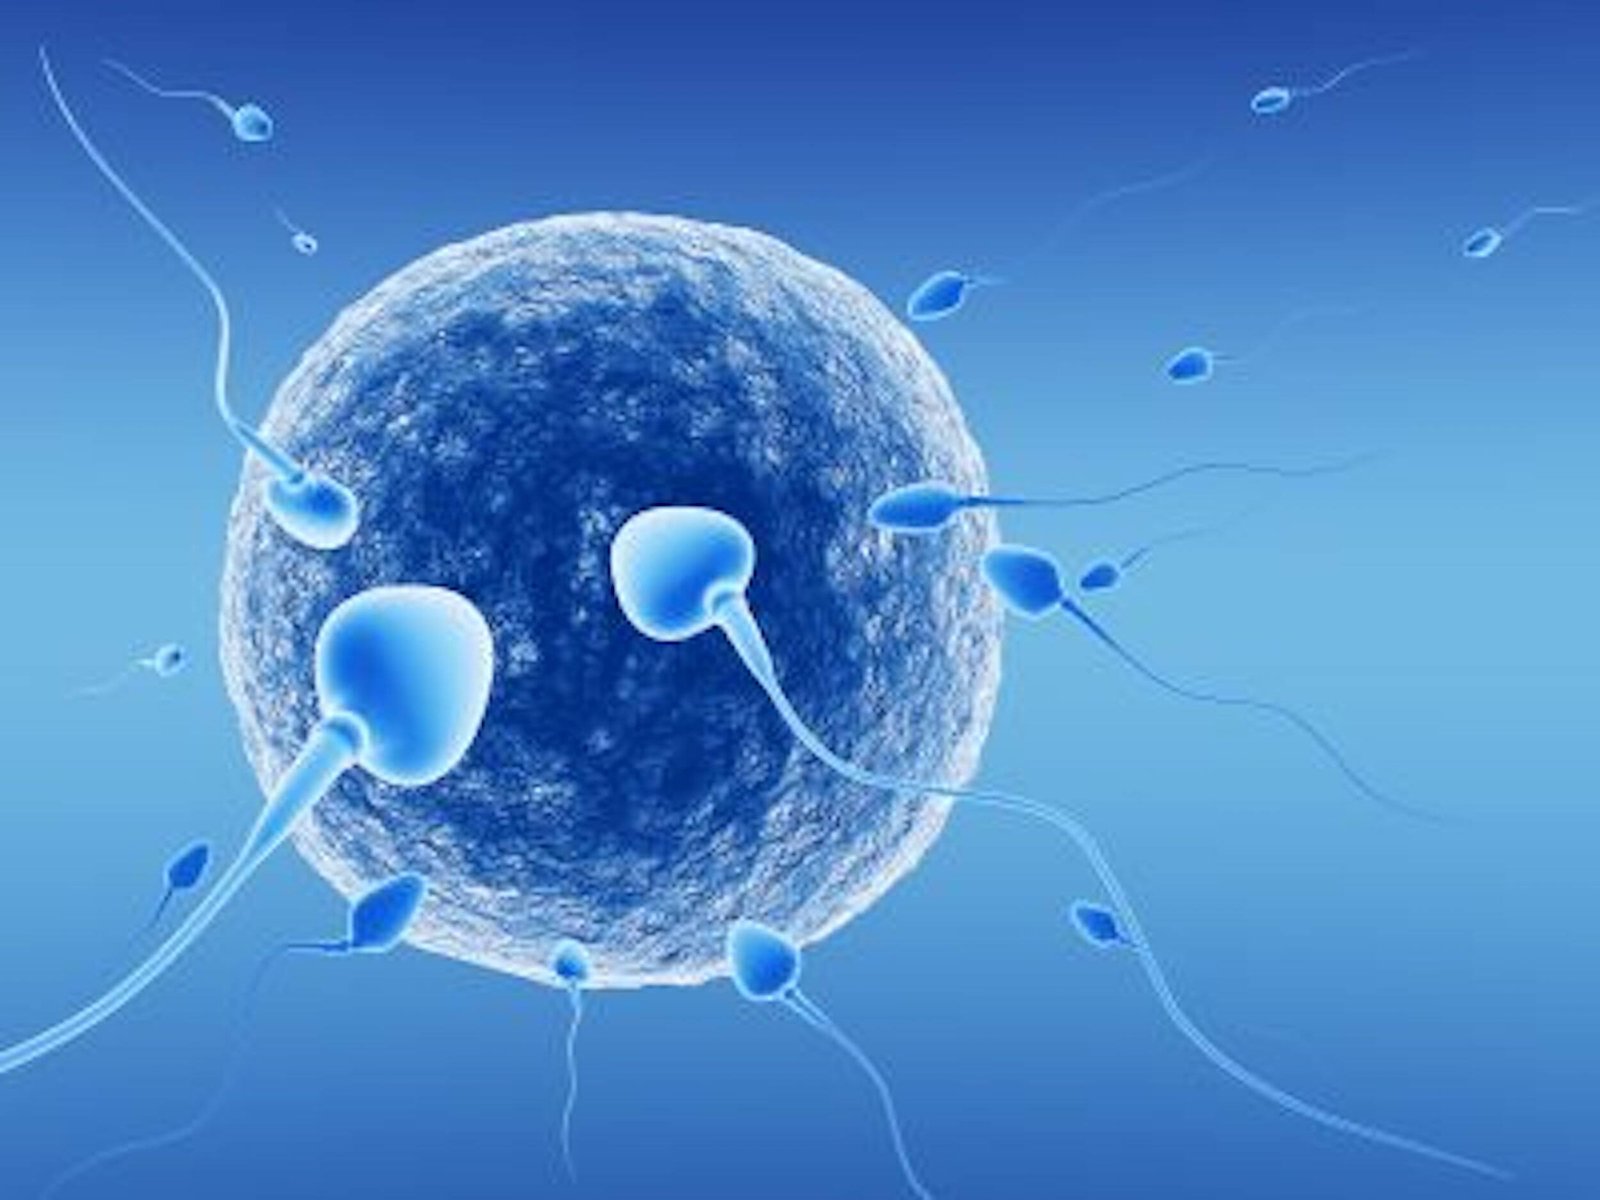 IVF Programs - Vinsfertility.com